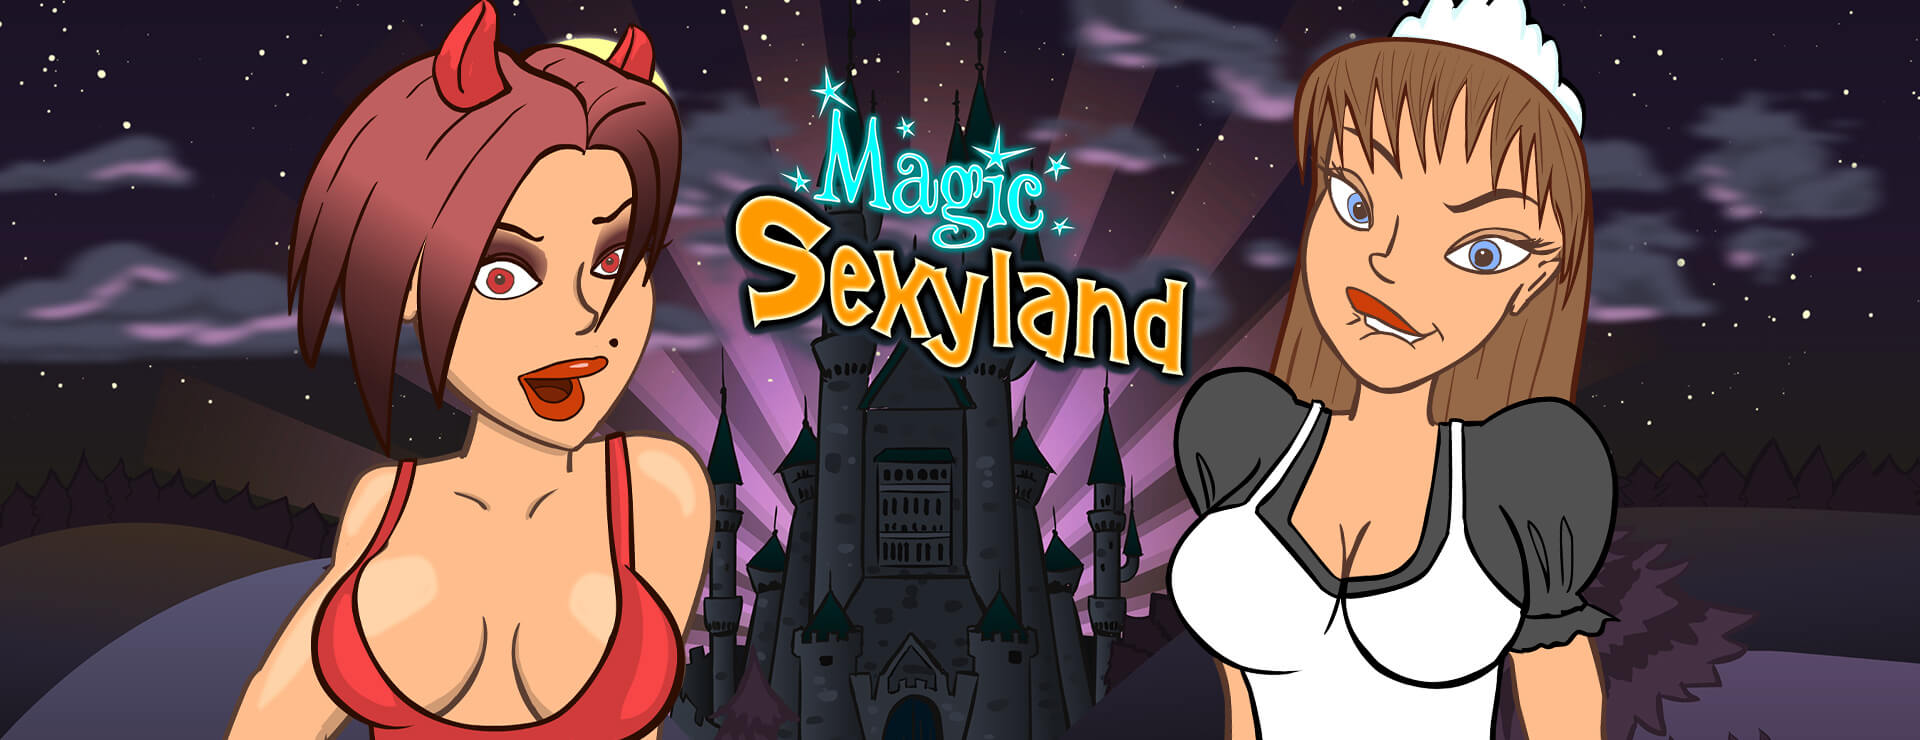 Magic Sexyland - Łatwe Gra